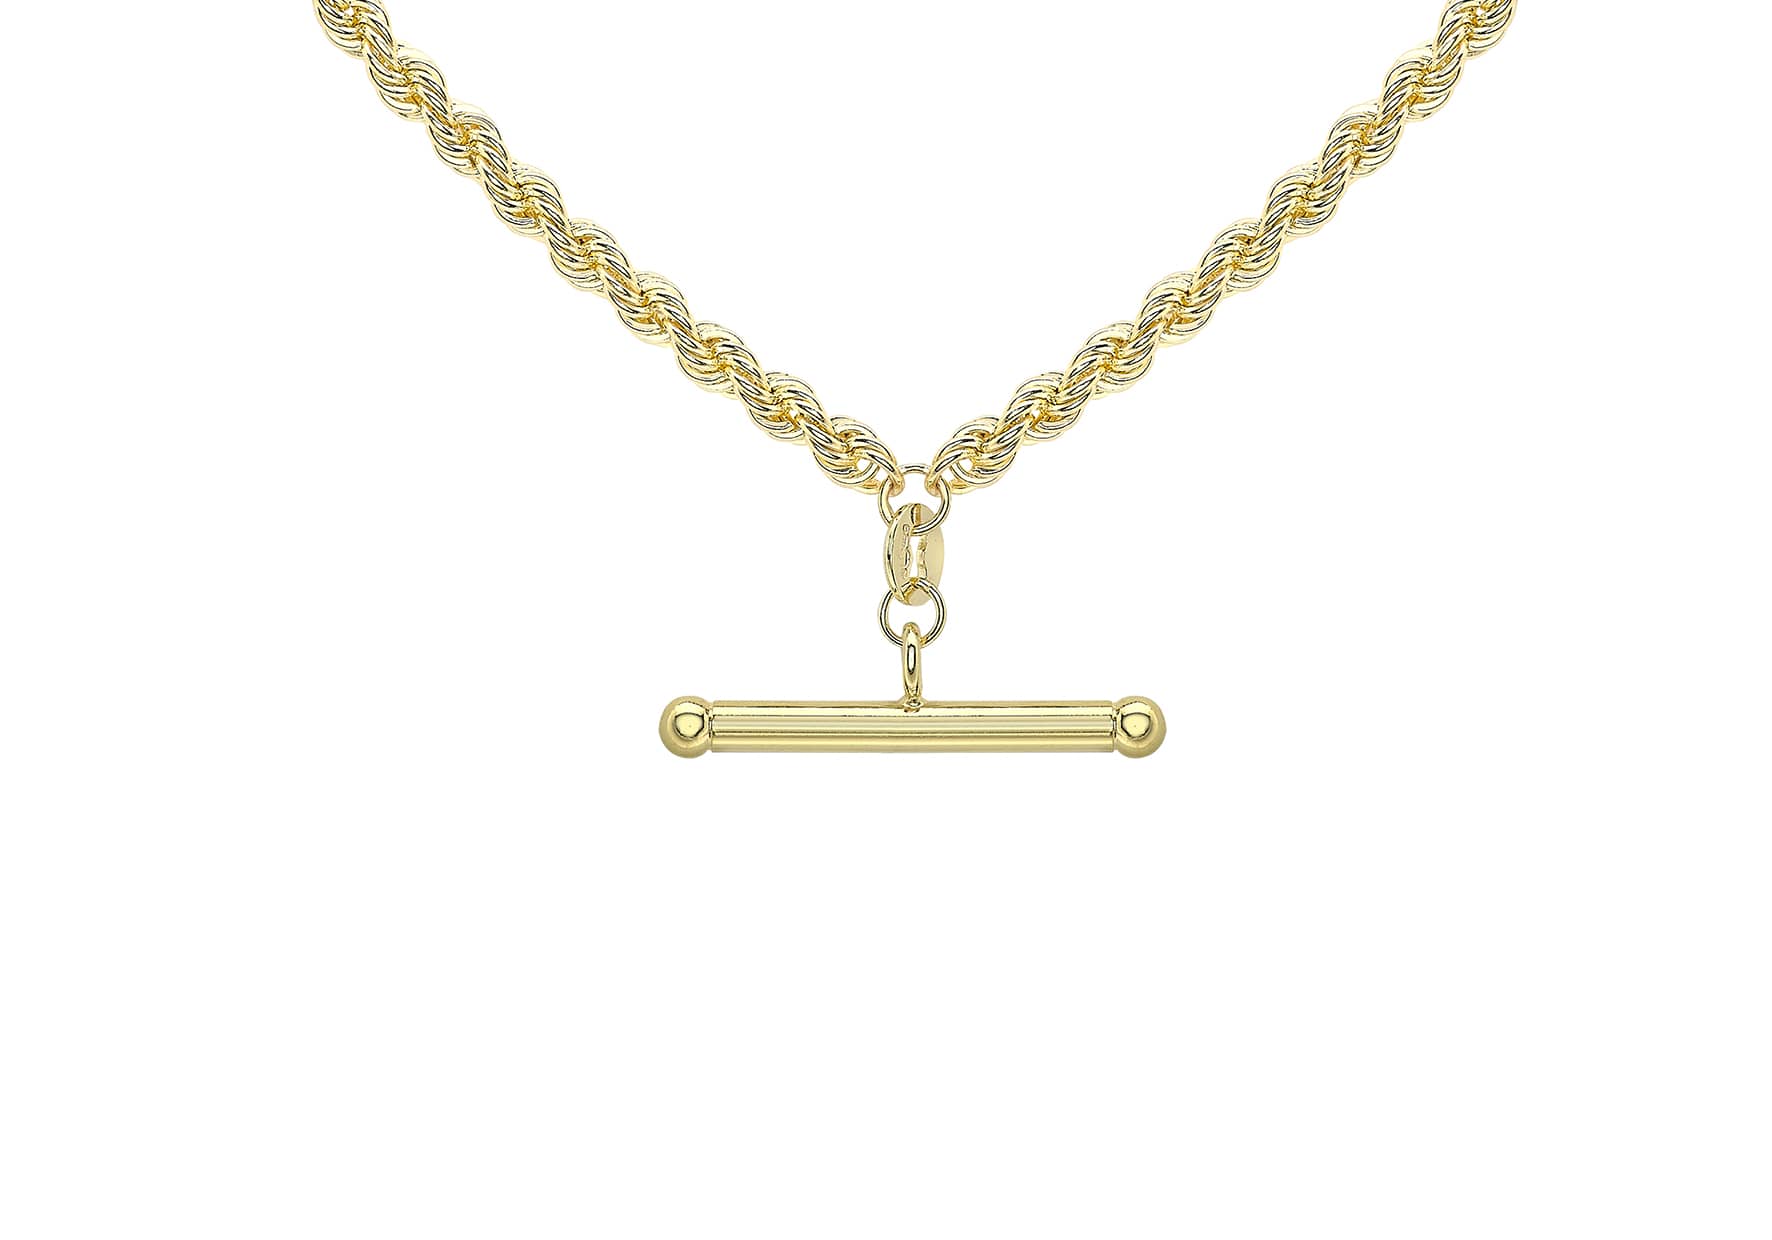 9ct Gold Róisín T-Bar Necklace